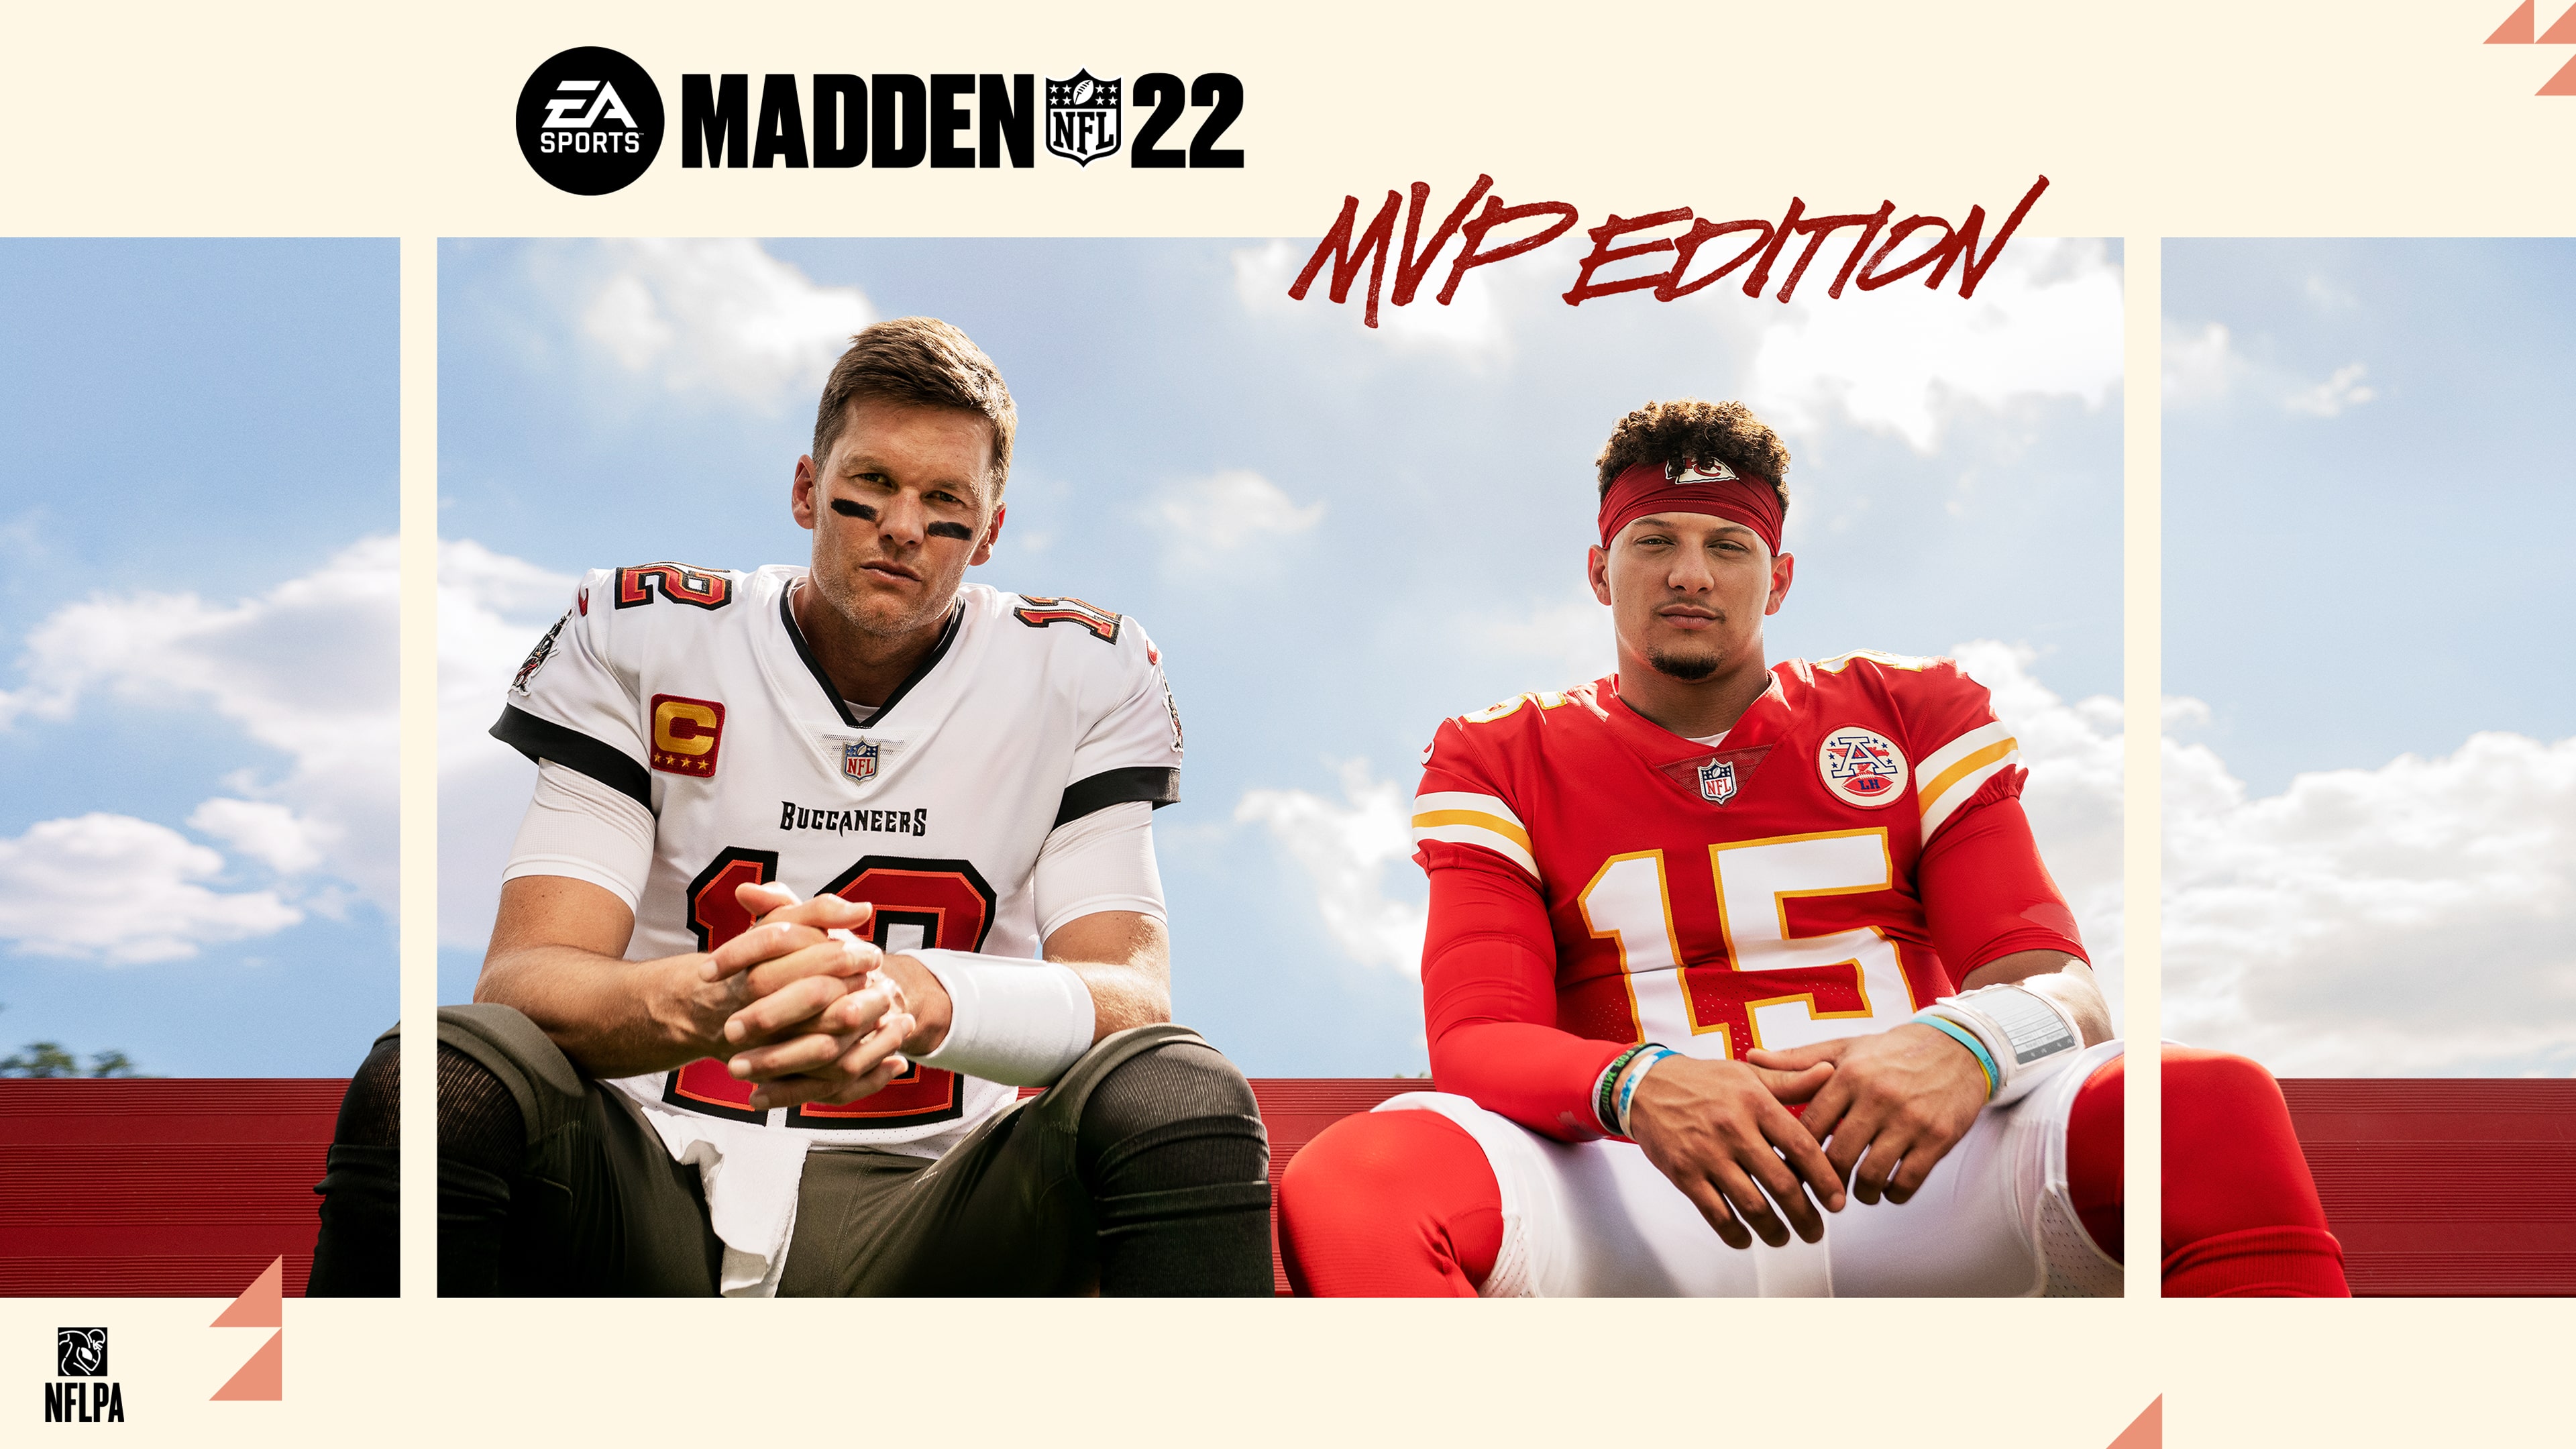 Madden NFL 22 PS4™